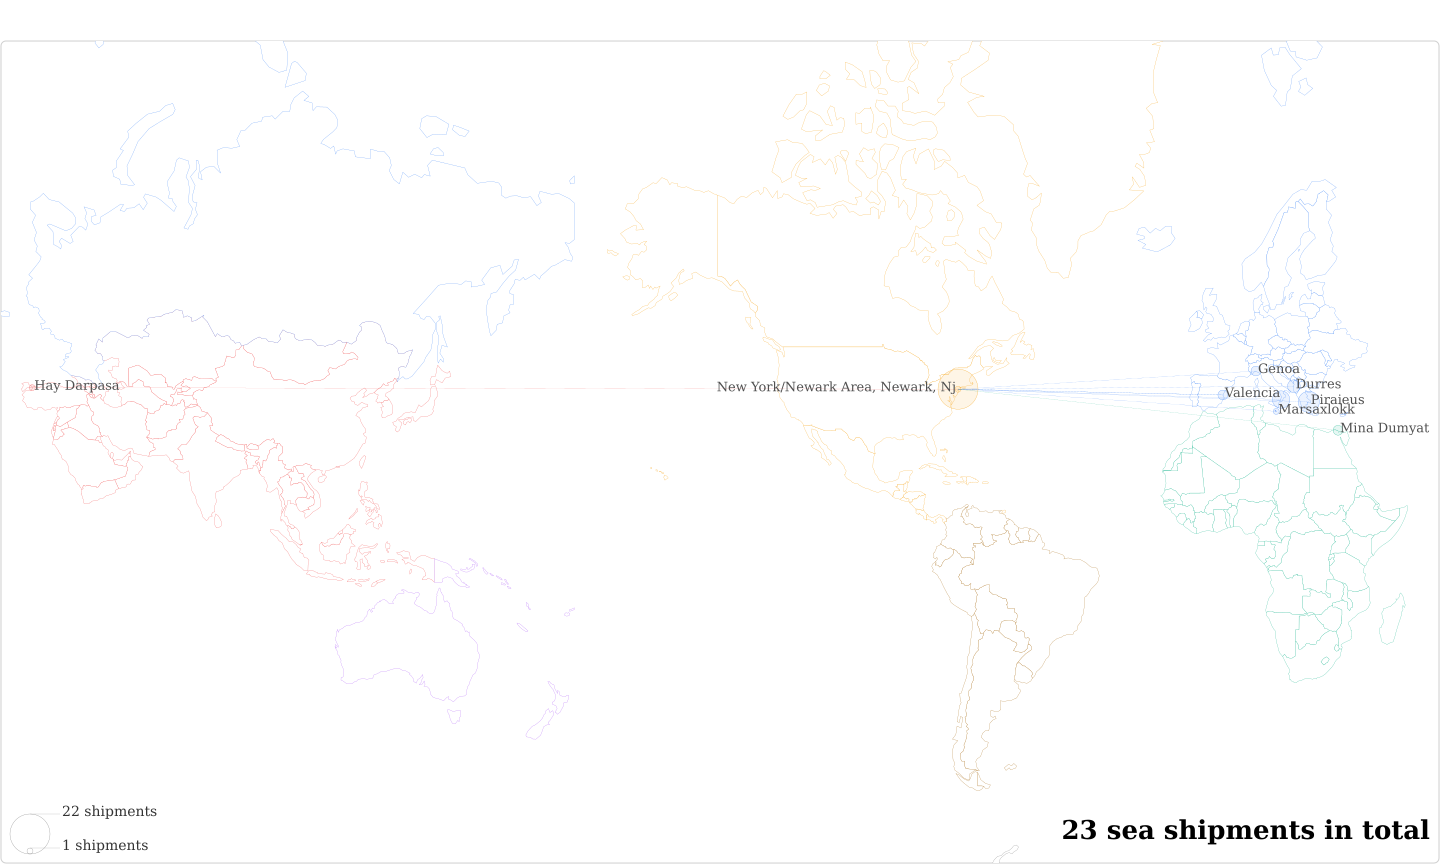 Devolli's Imports Per Country Map